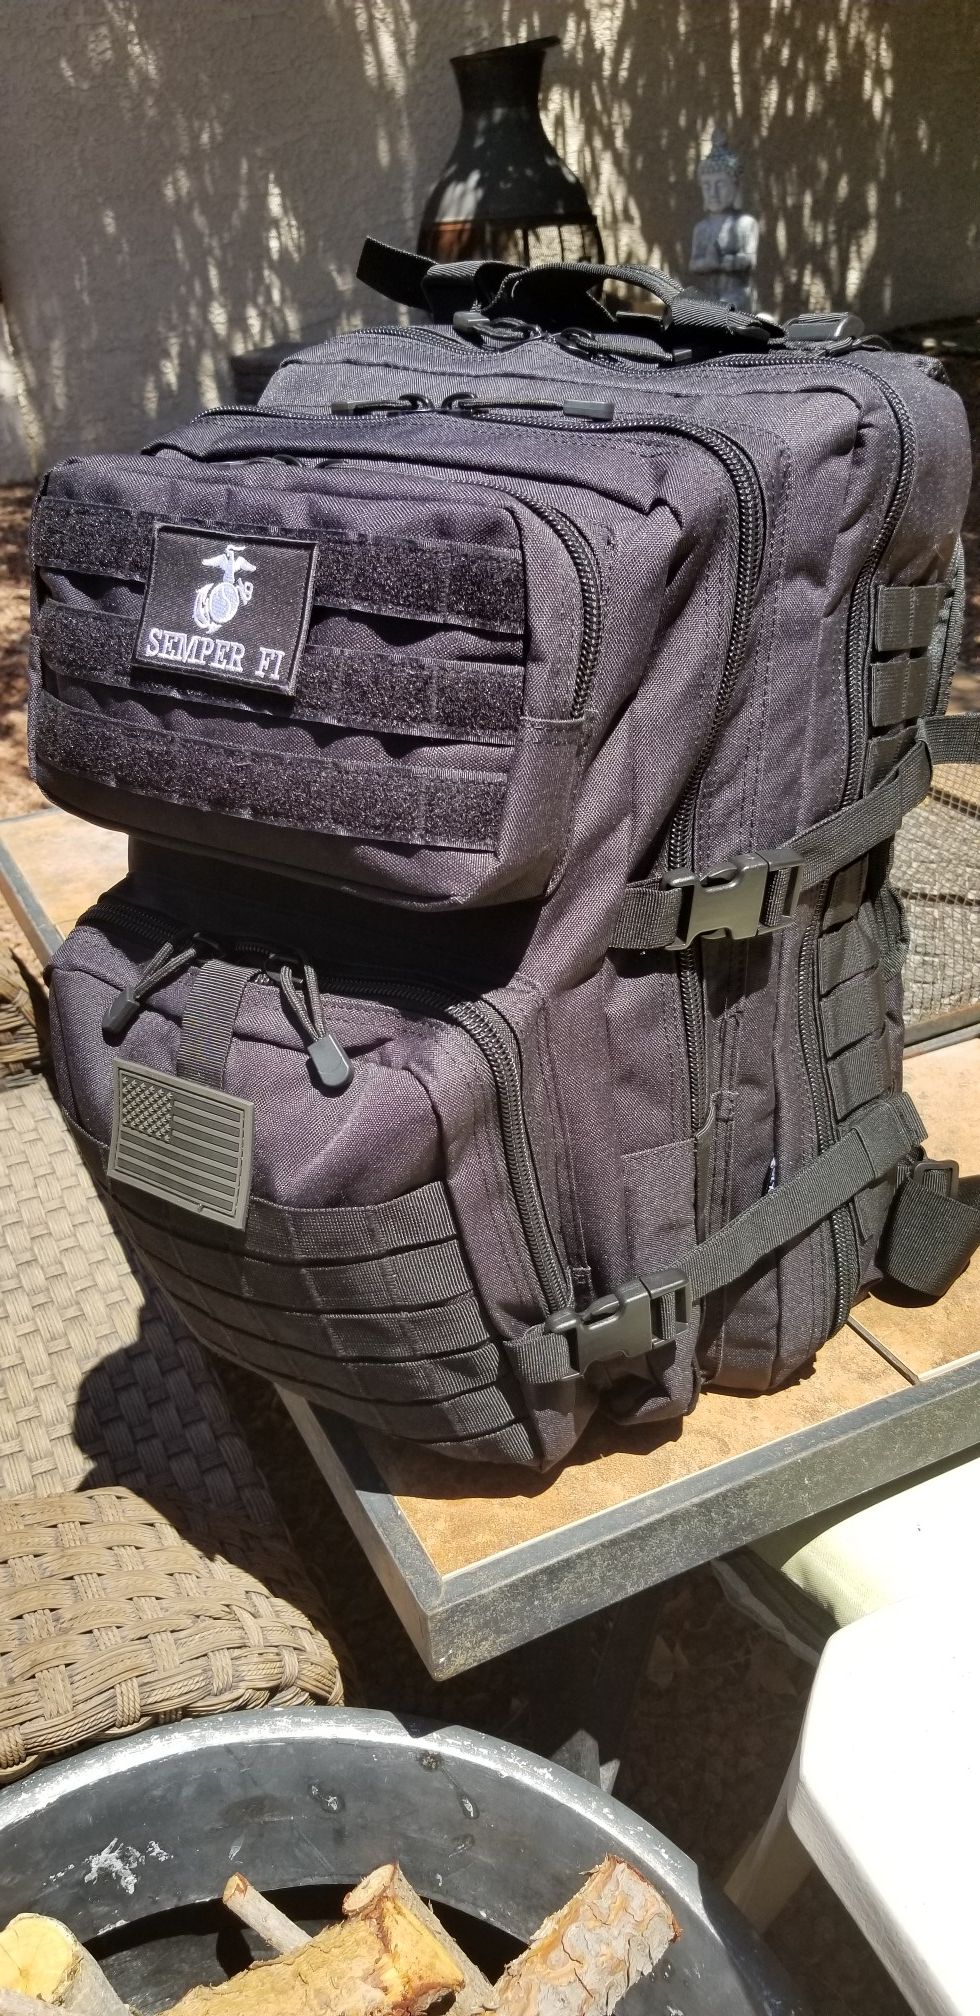 USMC Military-style Backpack